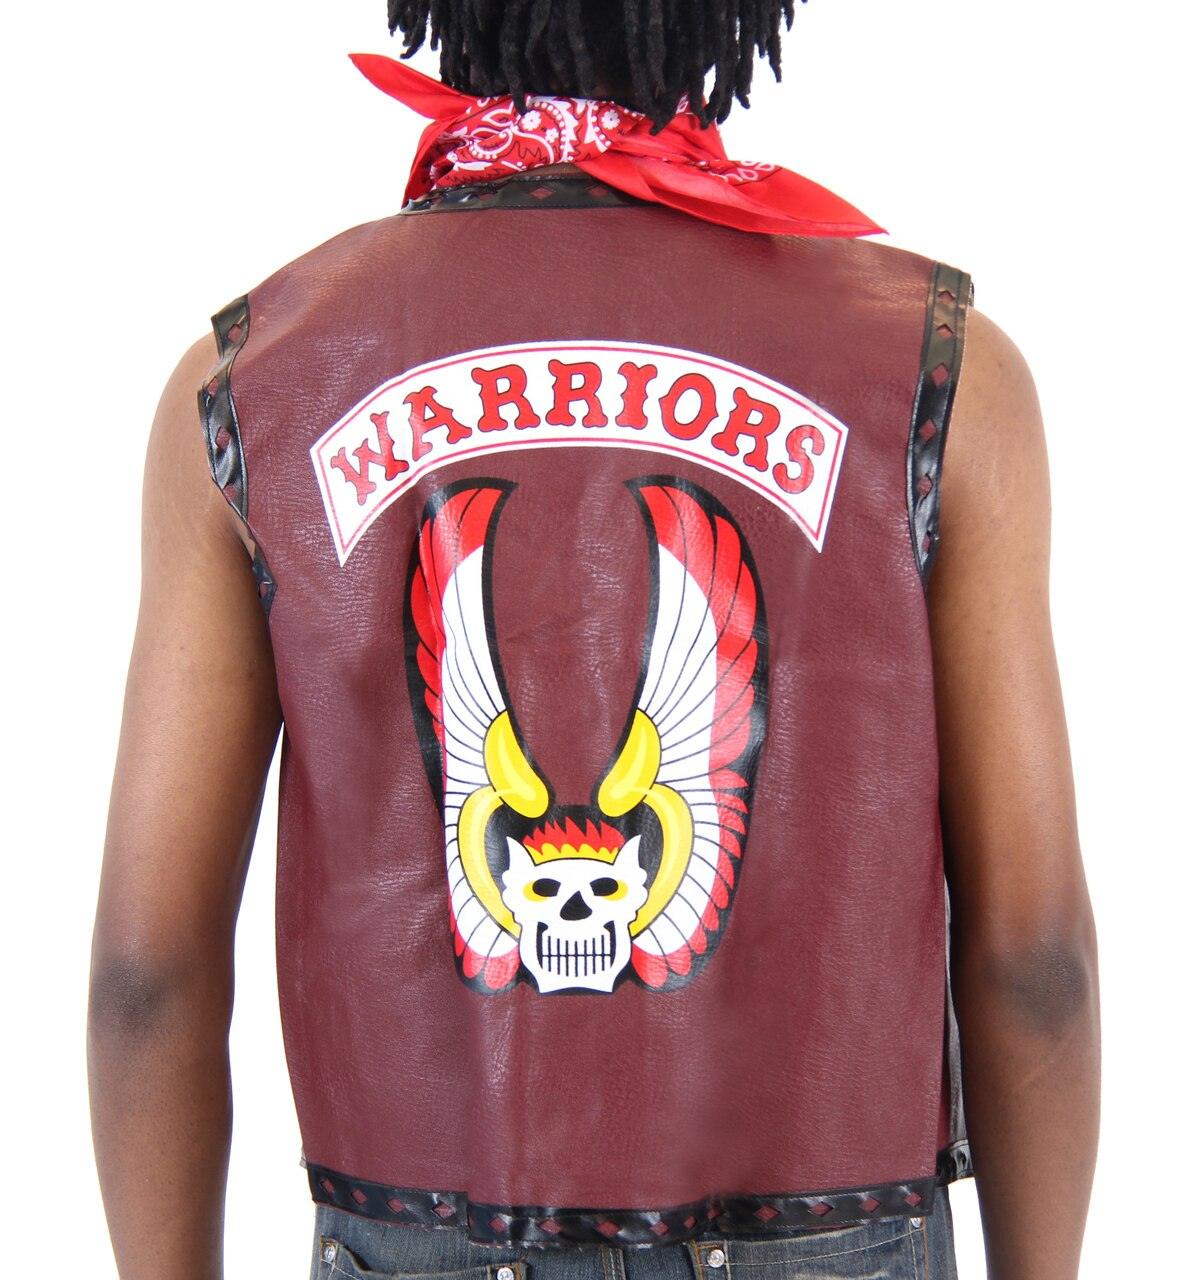 The Warriors Gang Member Emblem Leather Vest Jacket and Bandana-tvso